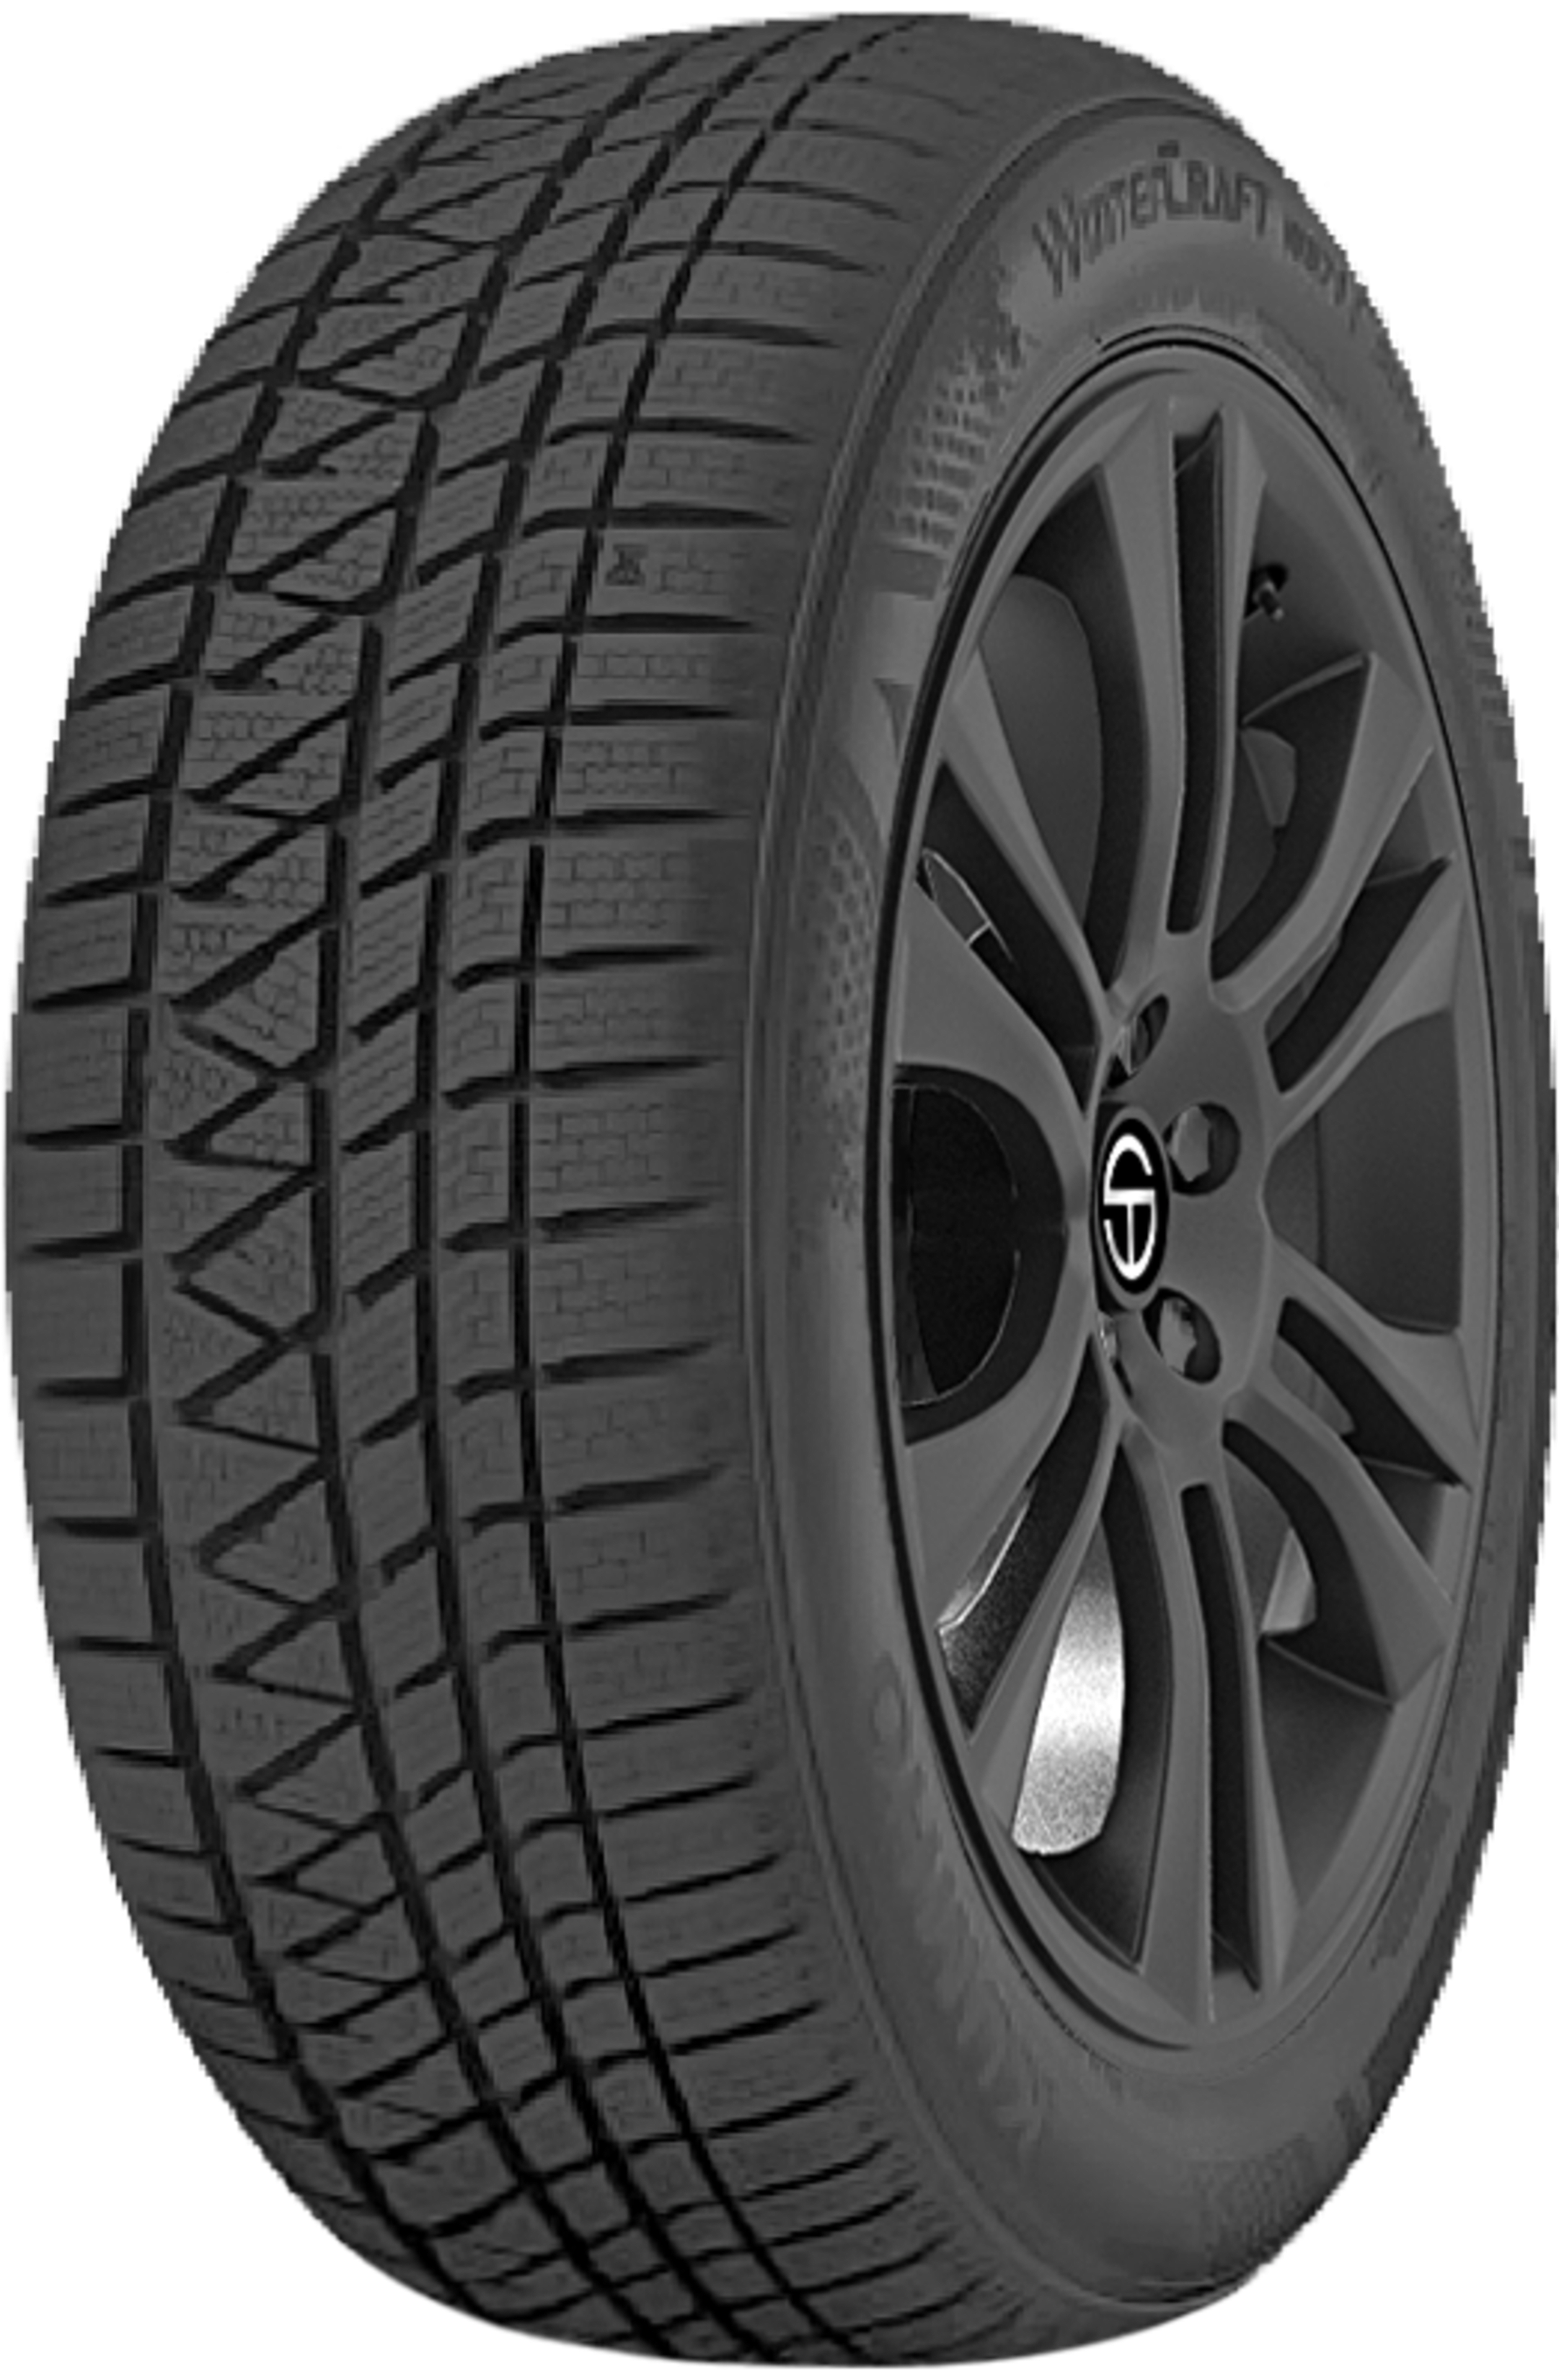 | Buy WS71 WinterCraft Tires SimpleTire Kumho 225/55R19